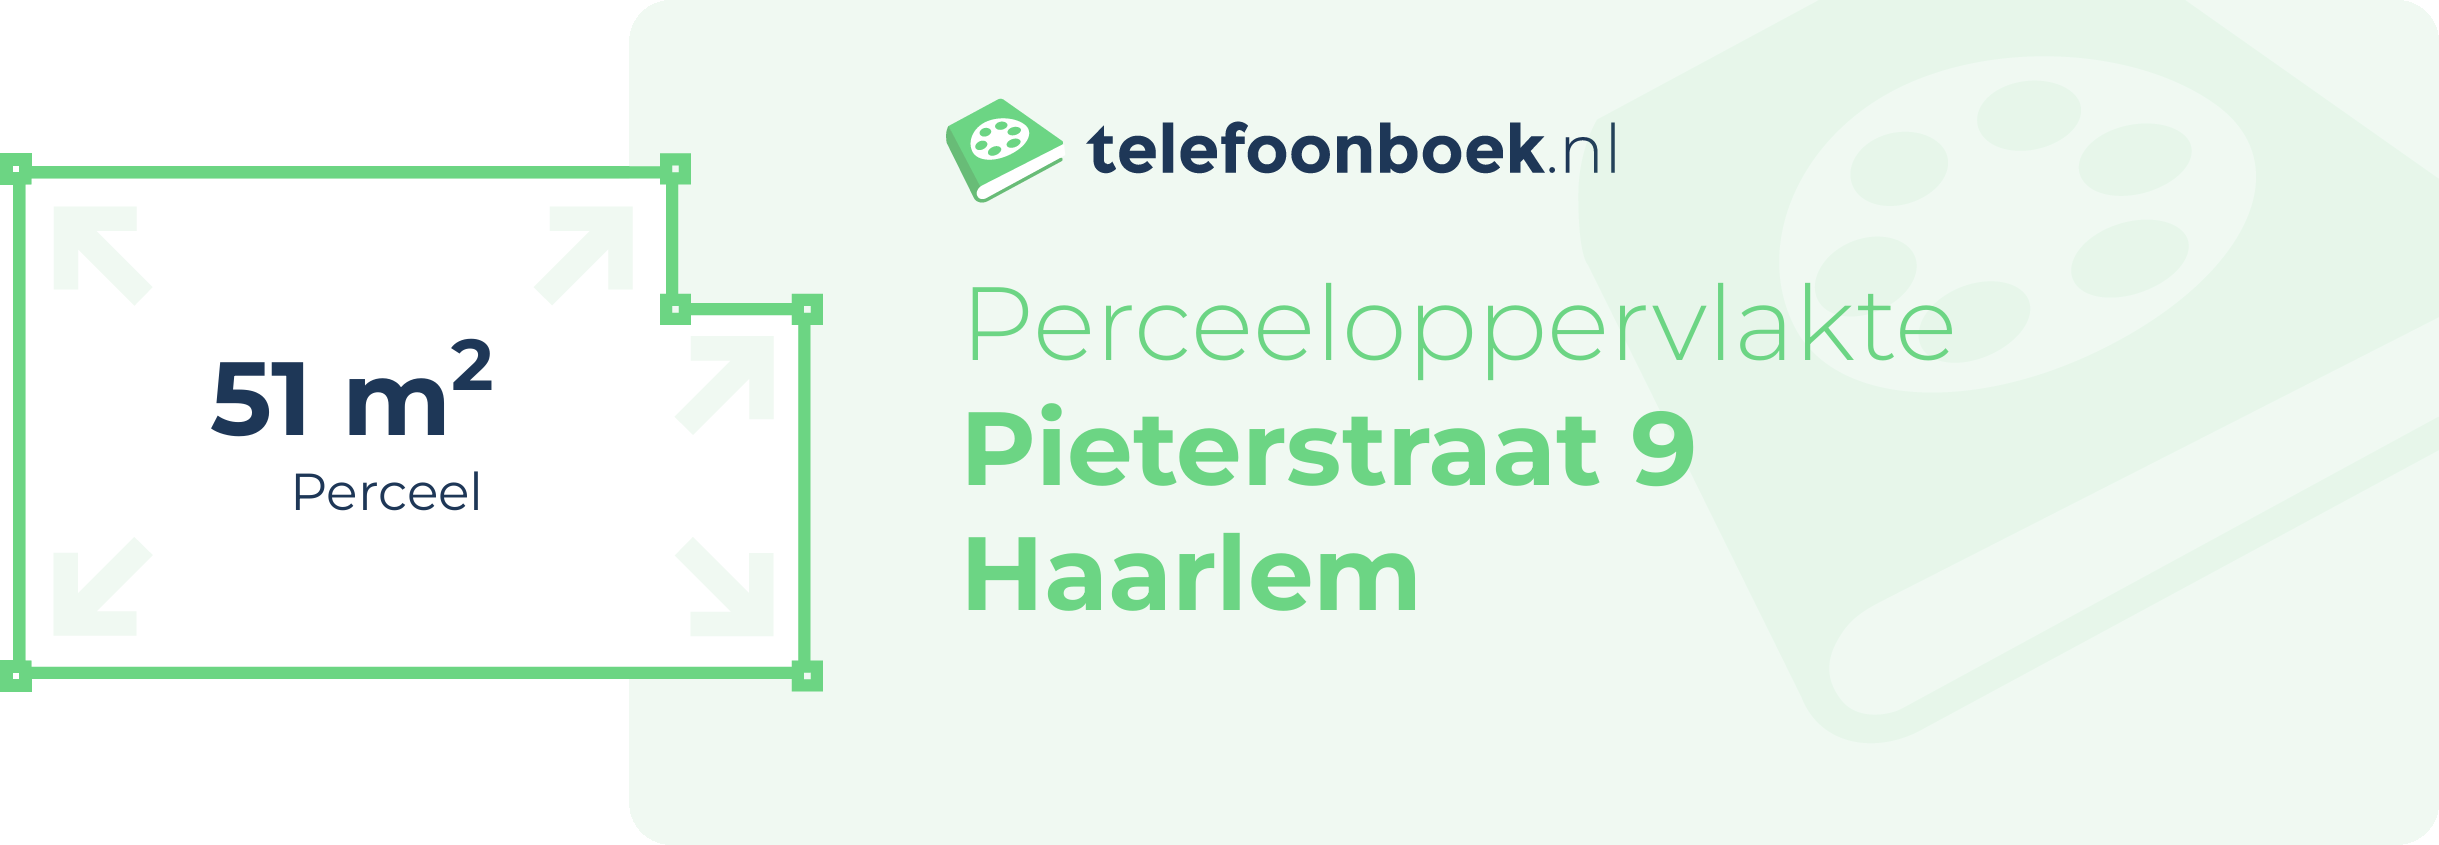 Perceeloppervlakte Pieterstraat 9 Haarlem